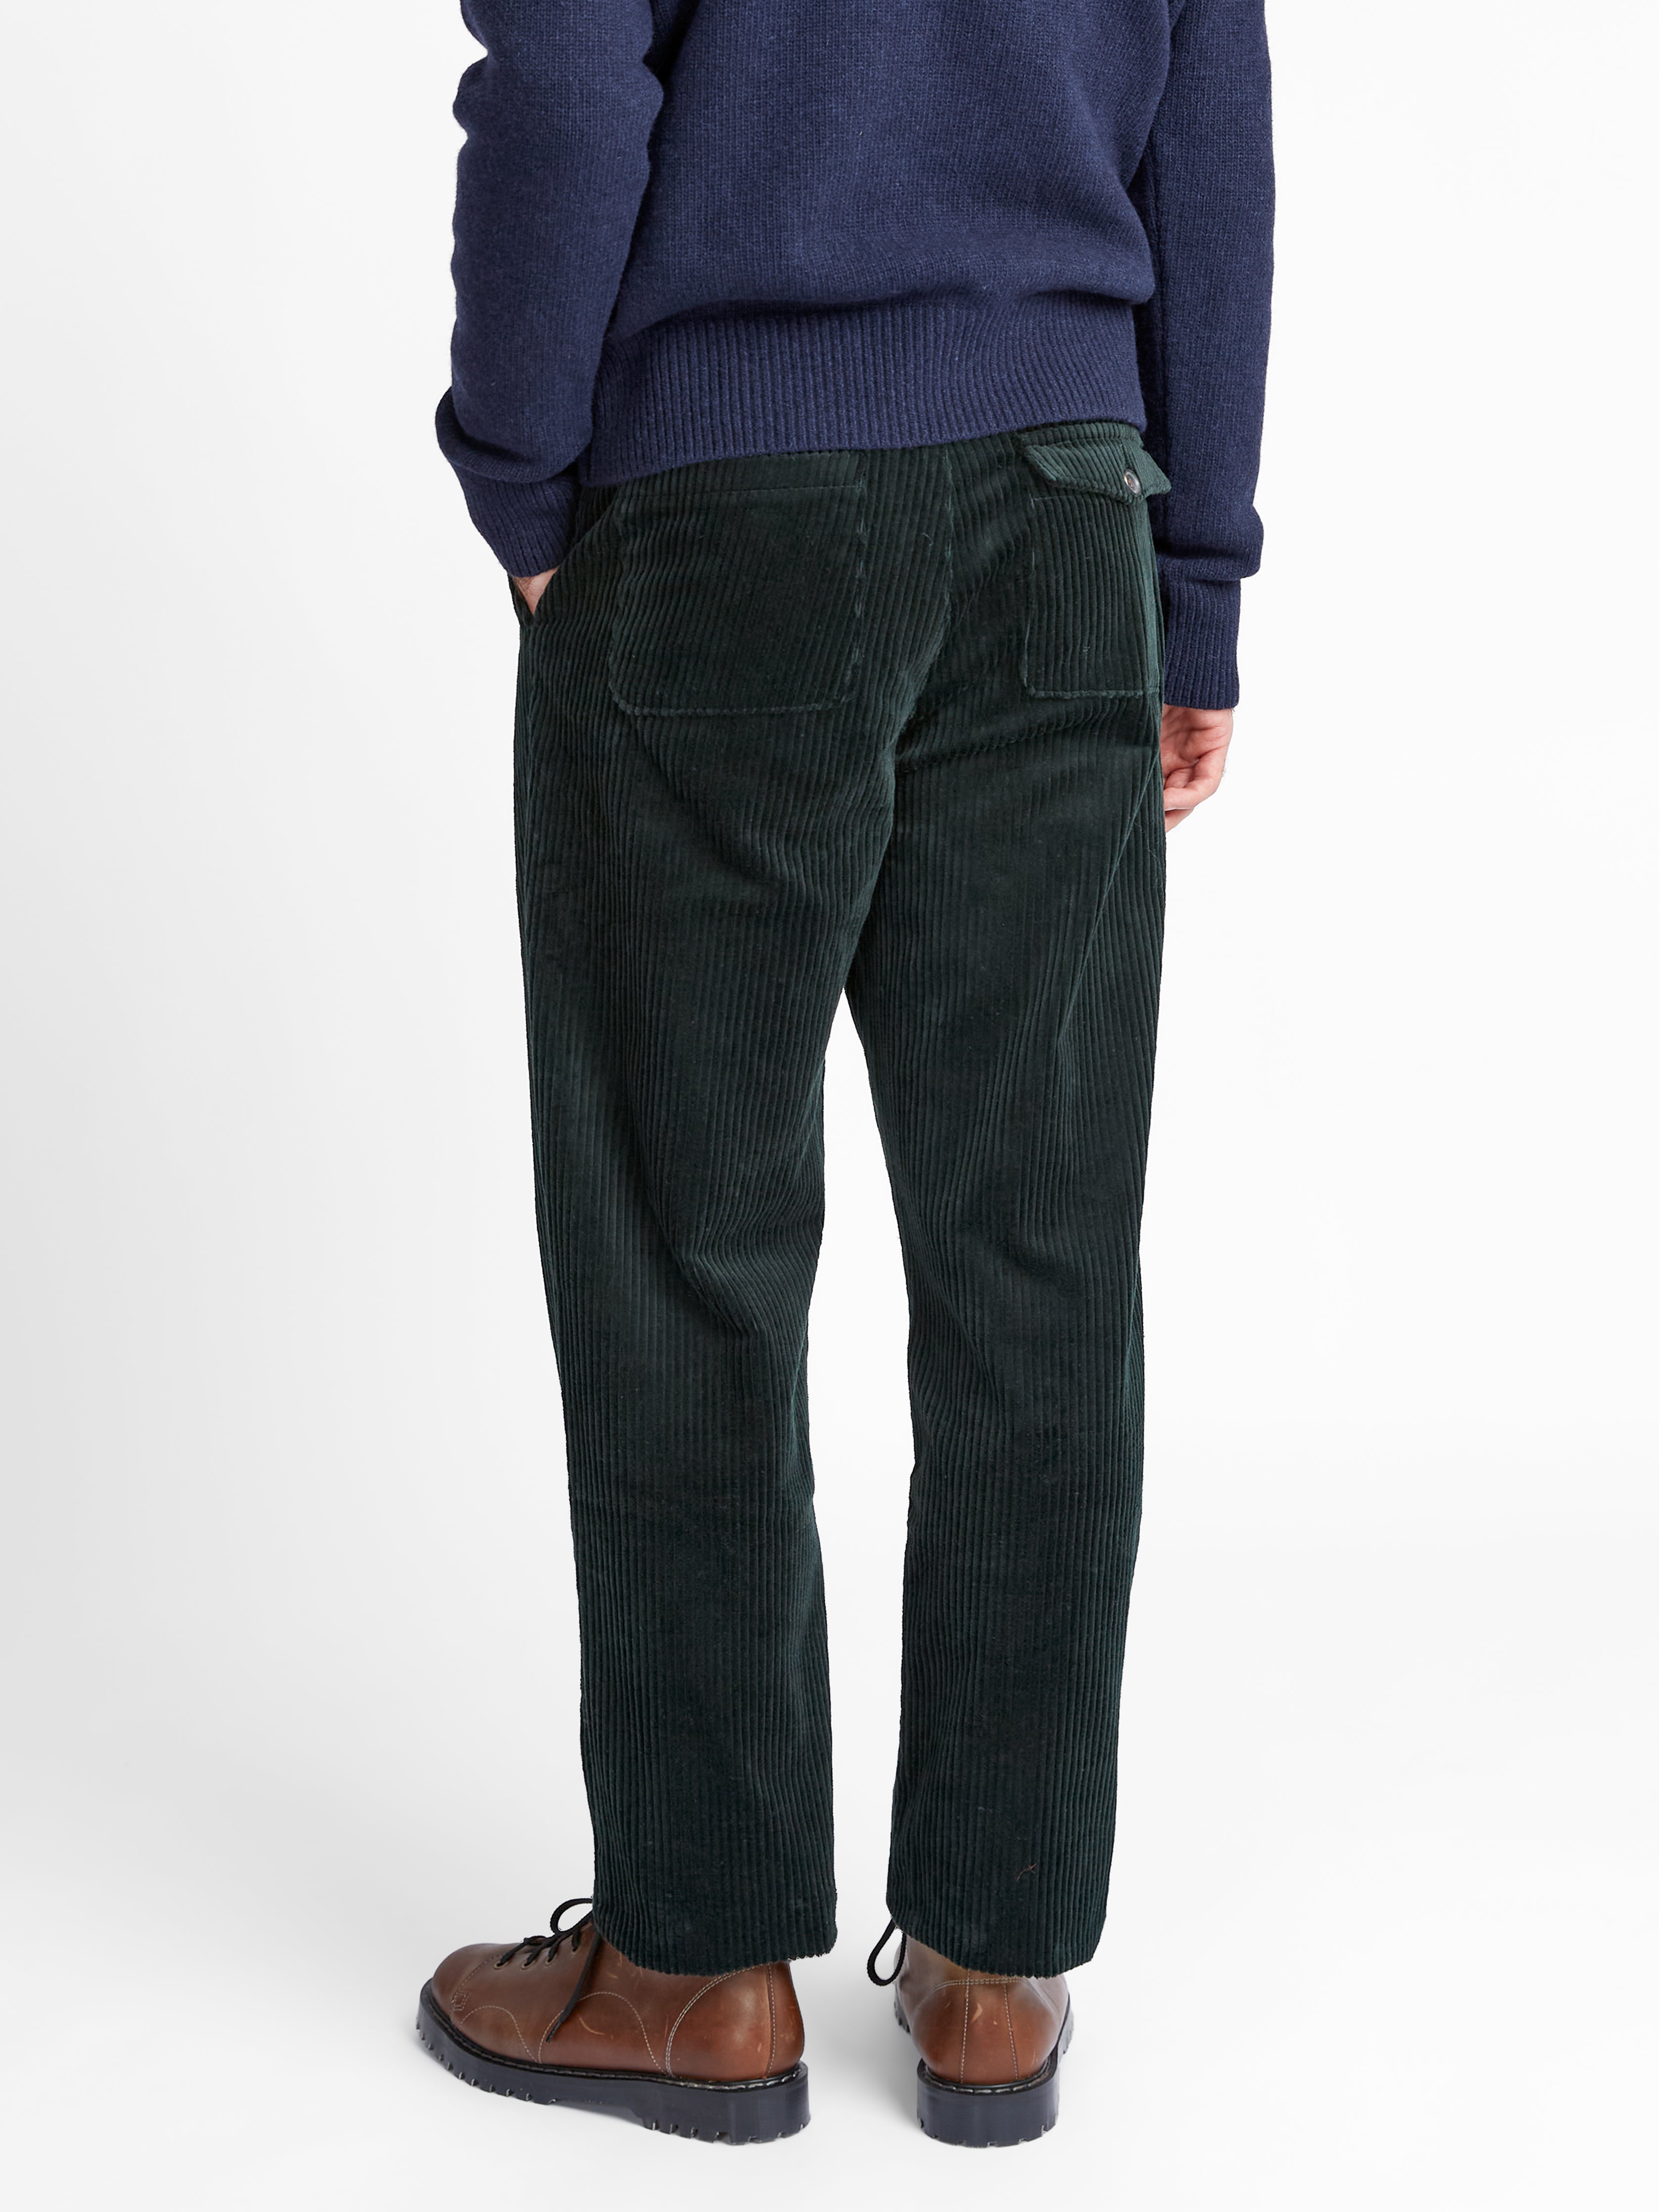 Morton Trousers Melrose Cord Green